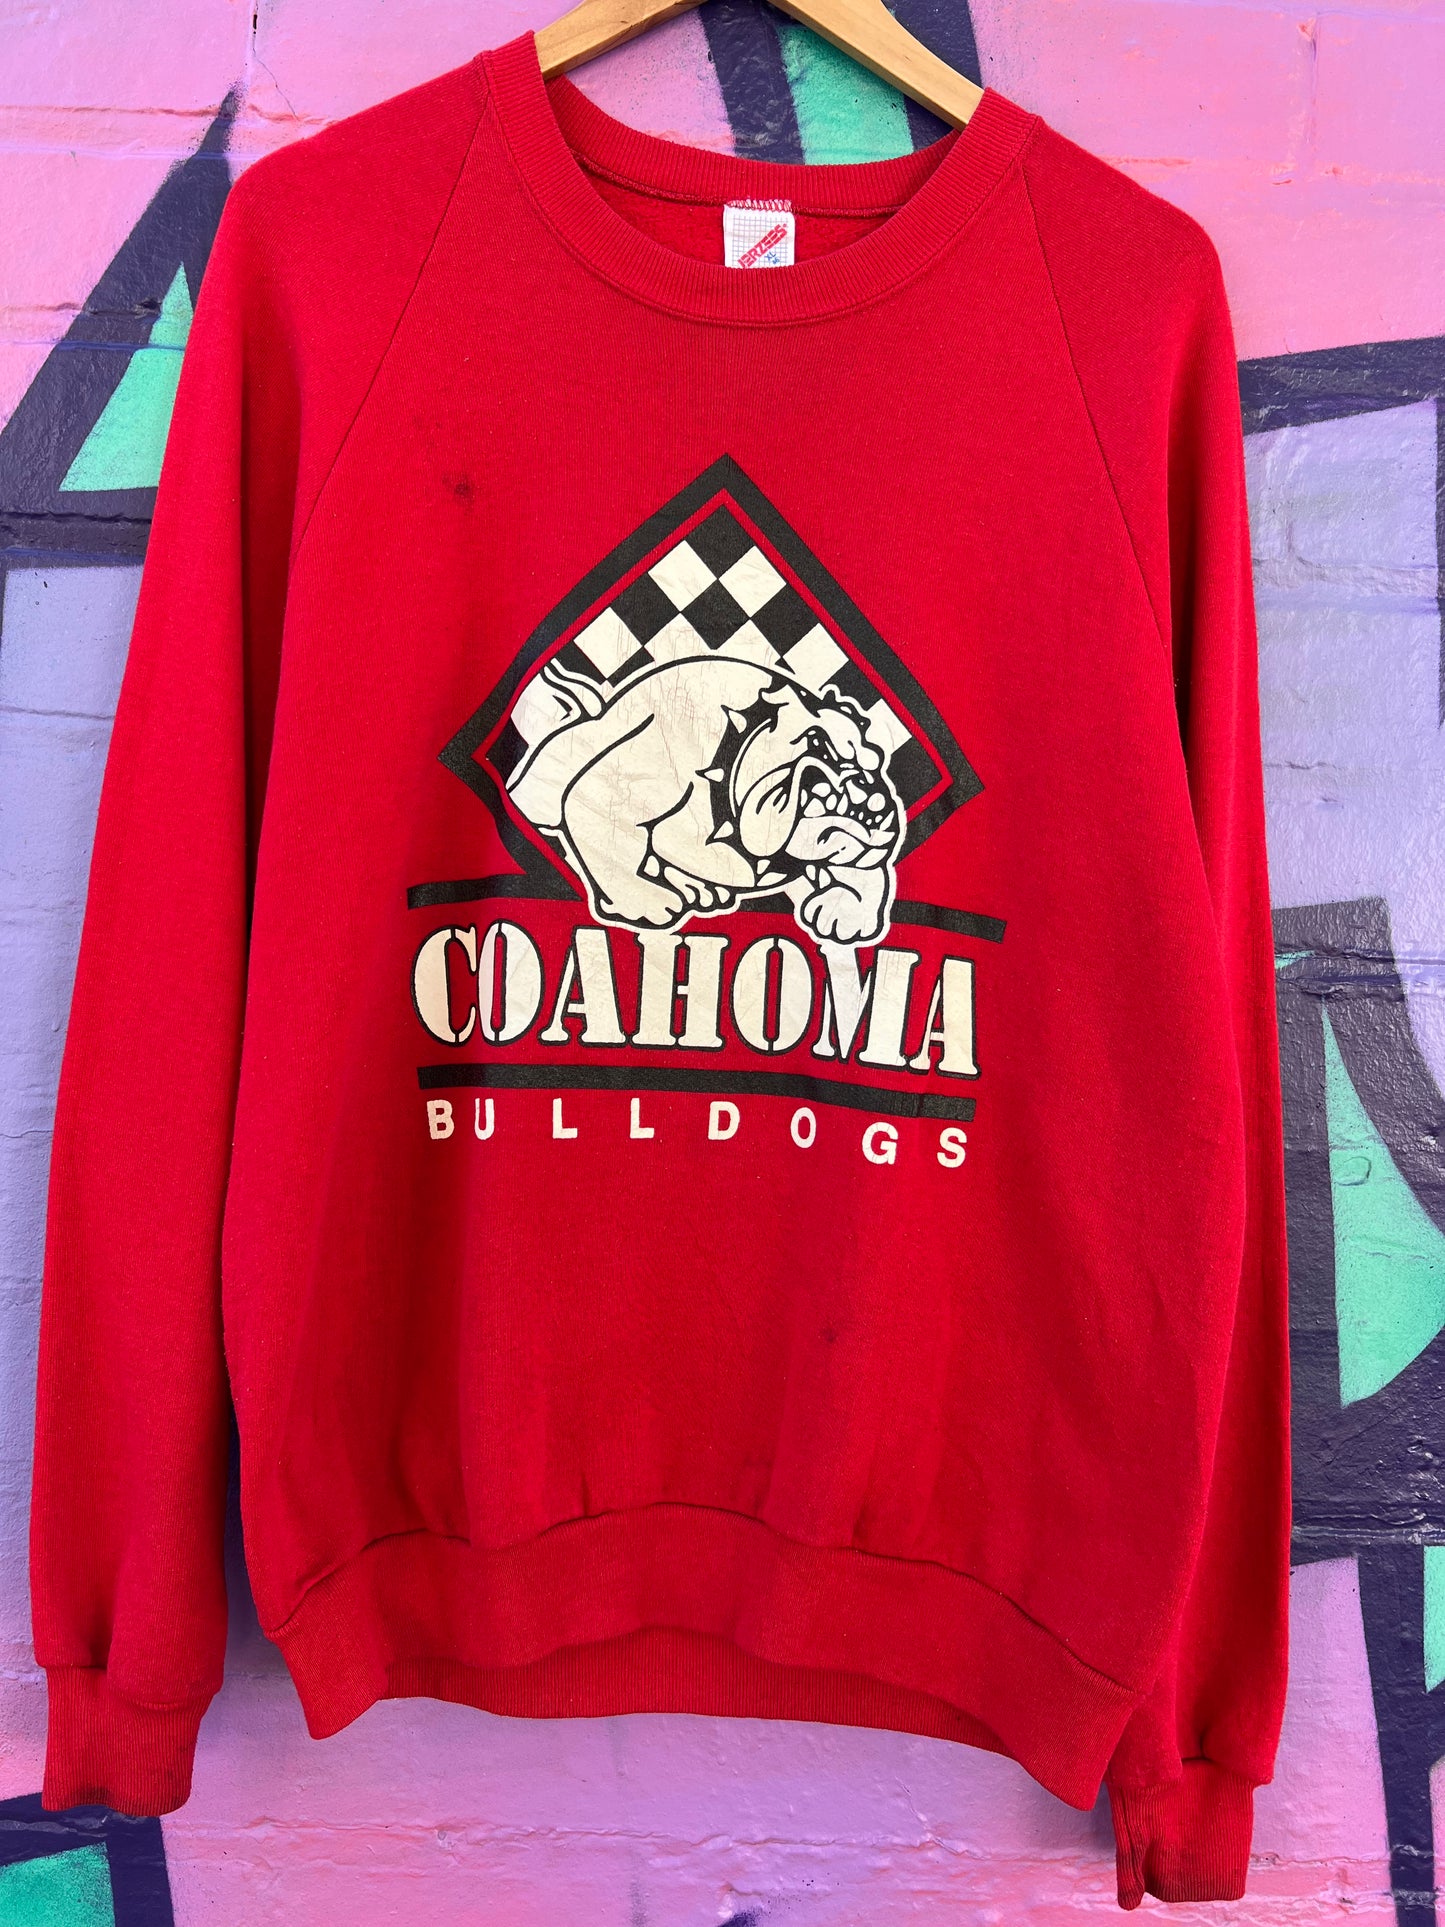 XL - Vintage Coahoma Bulldogs